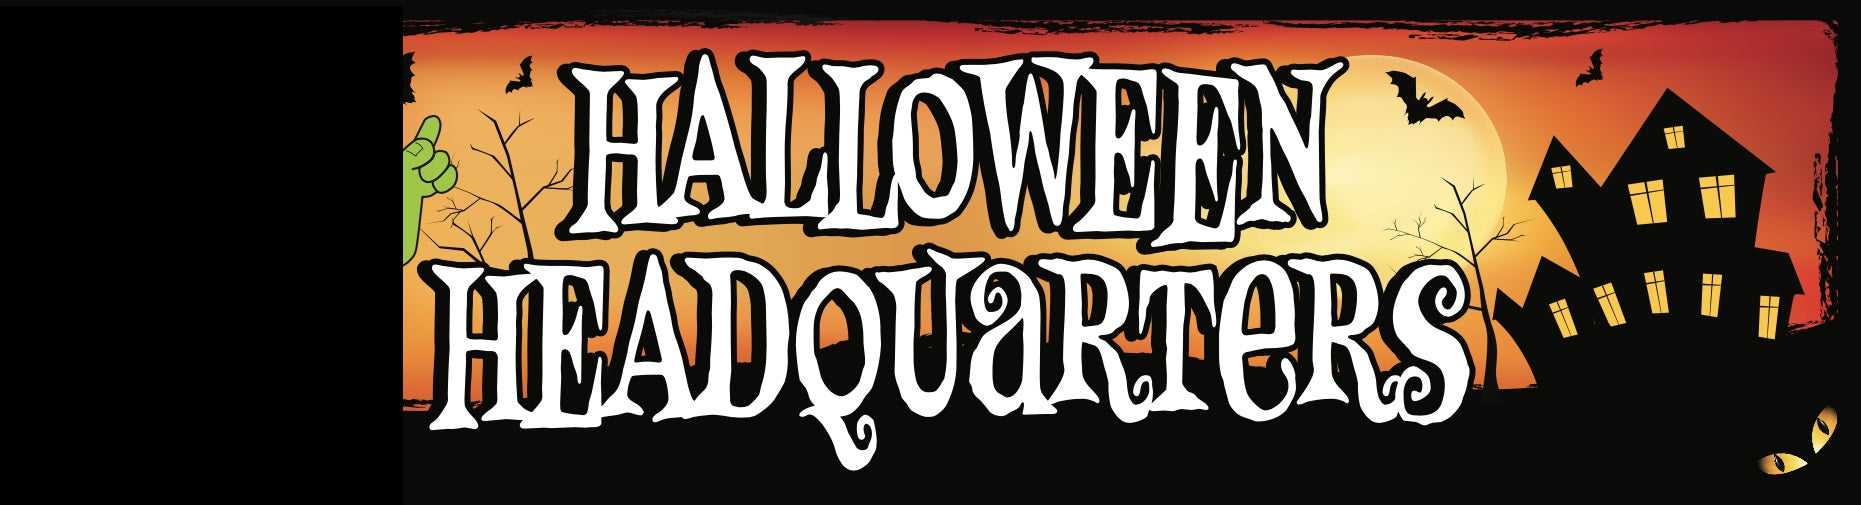 Halloween Headquarters Seasonal Banner-5'x3'